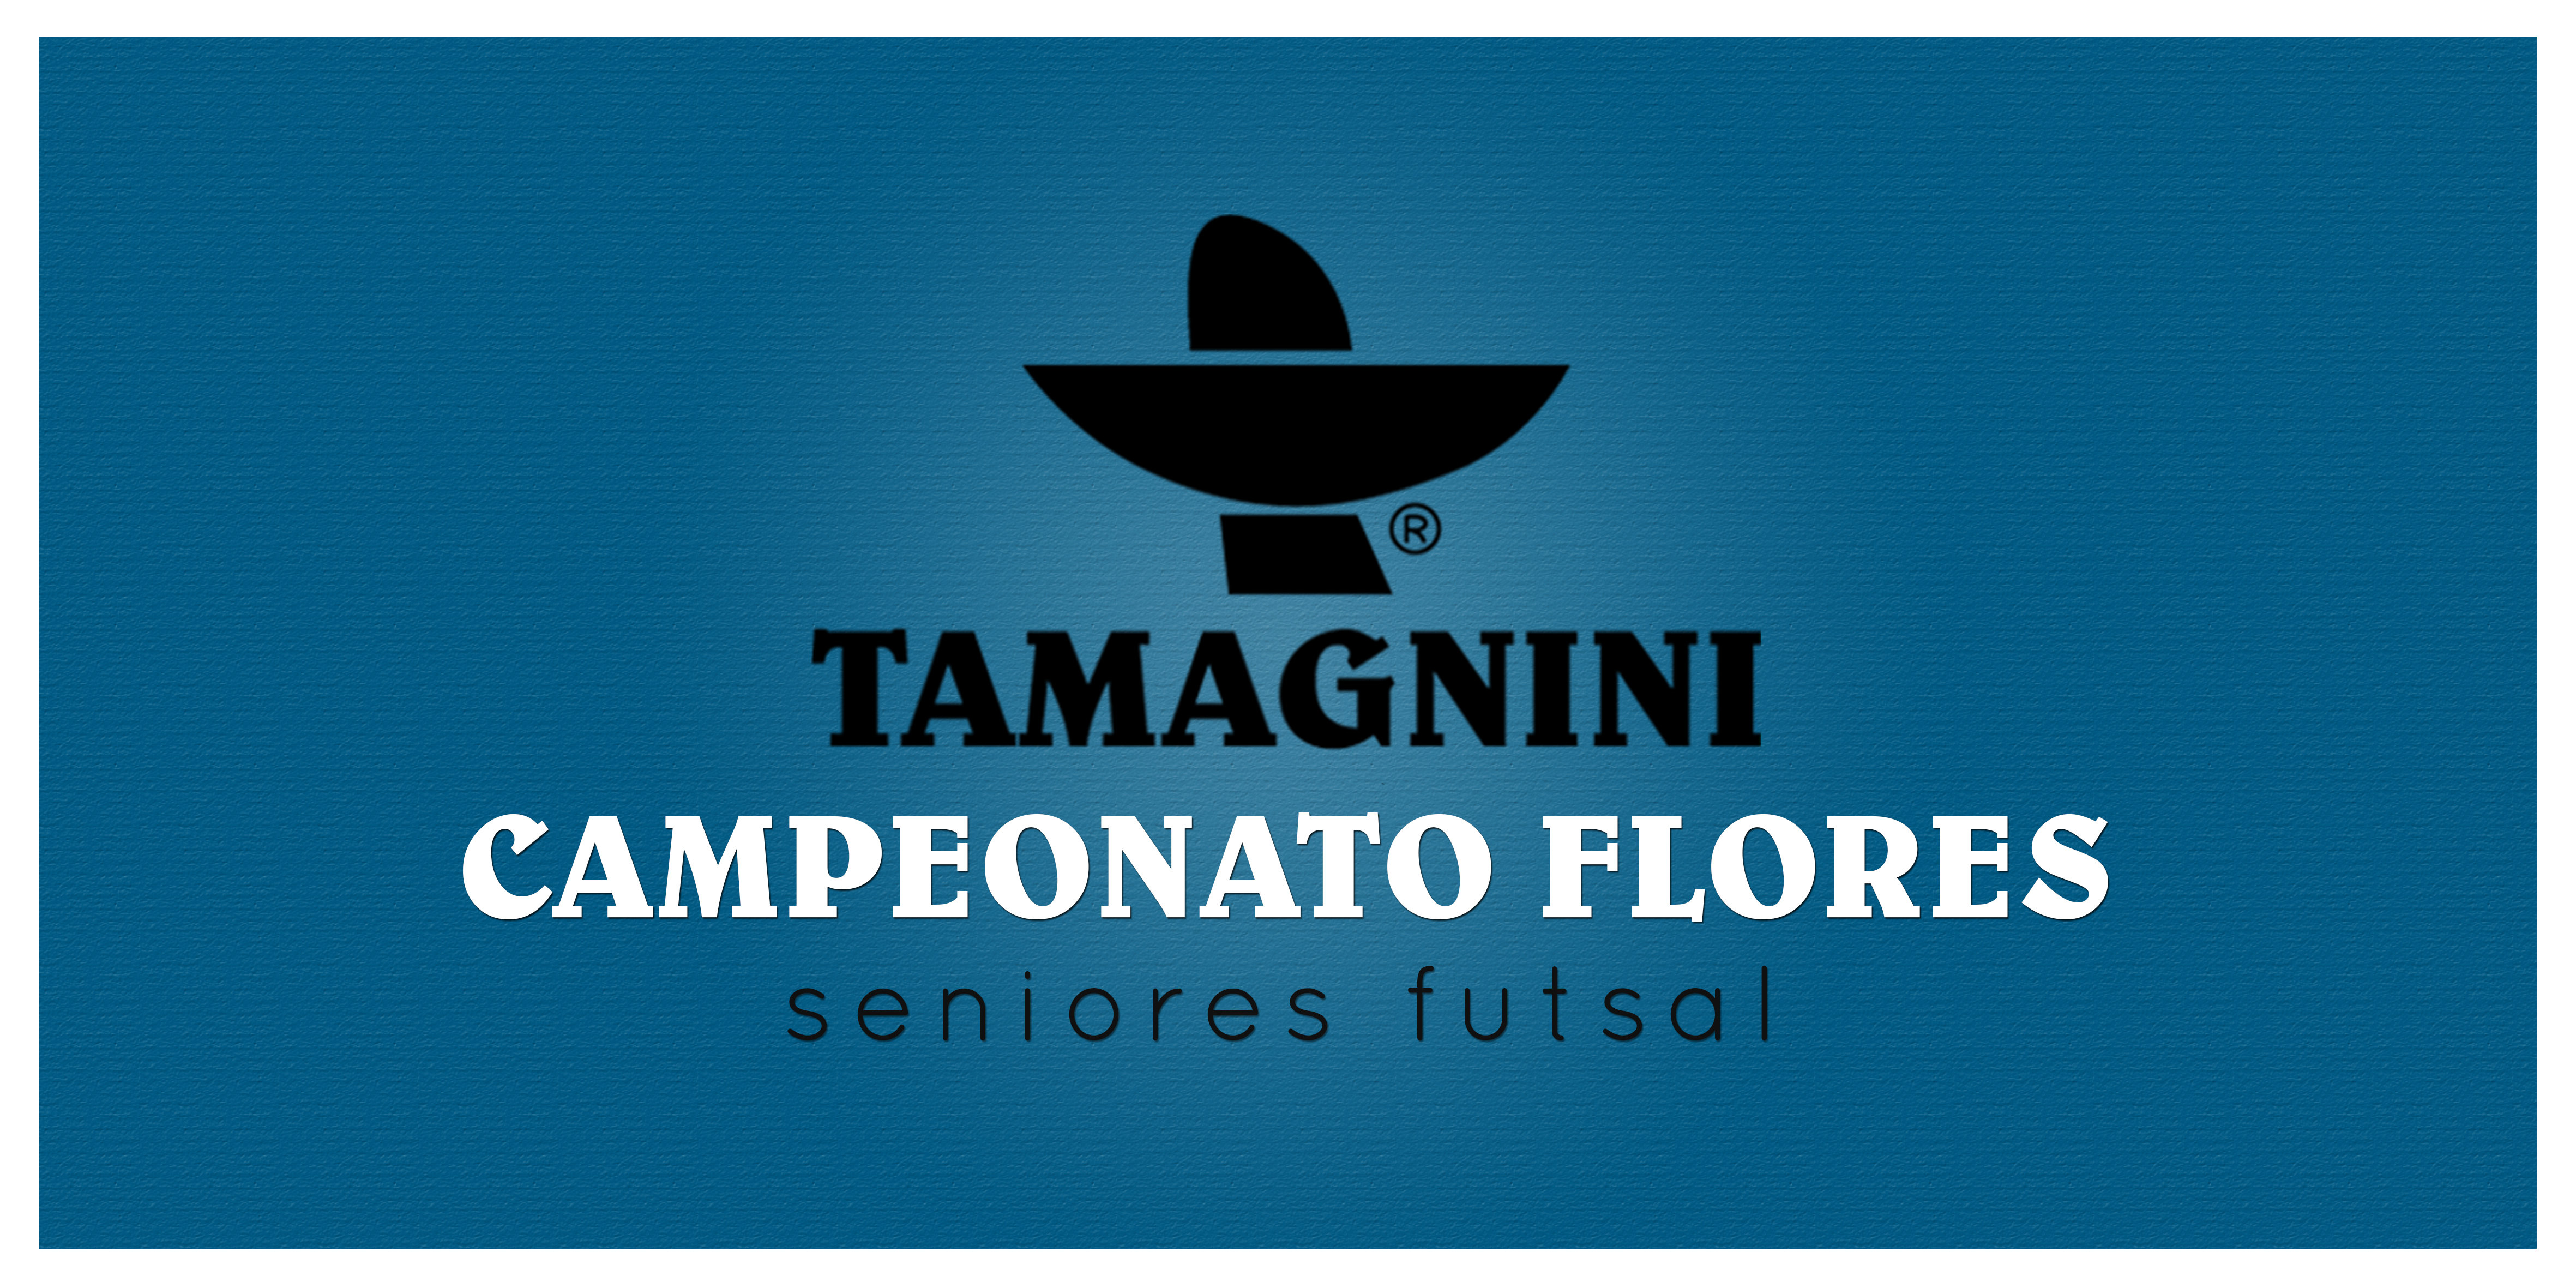 Tamagnini patrocina Campeonato das Flores - Seniores Futsal